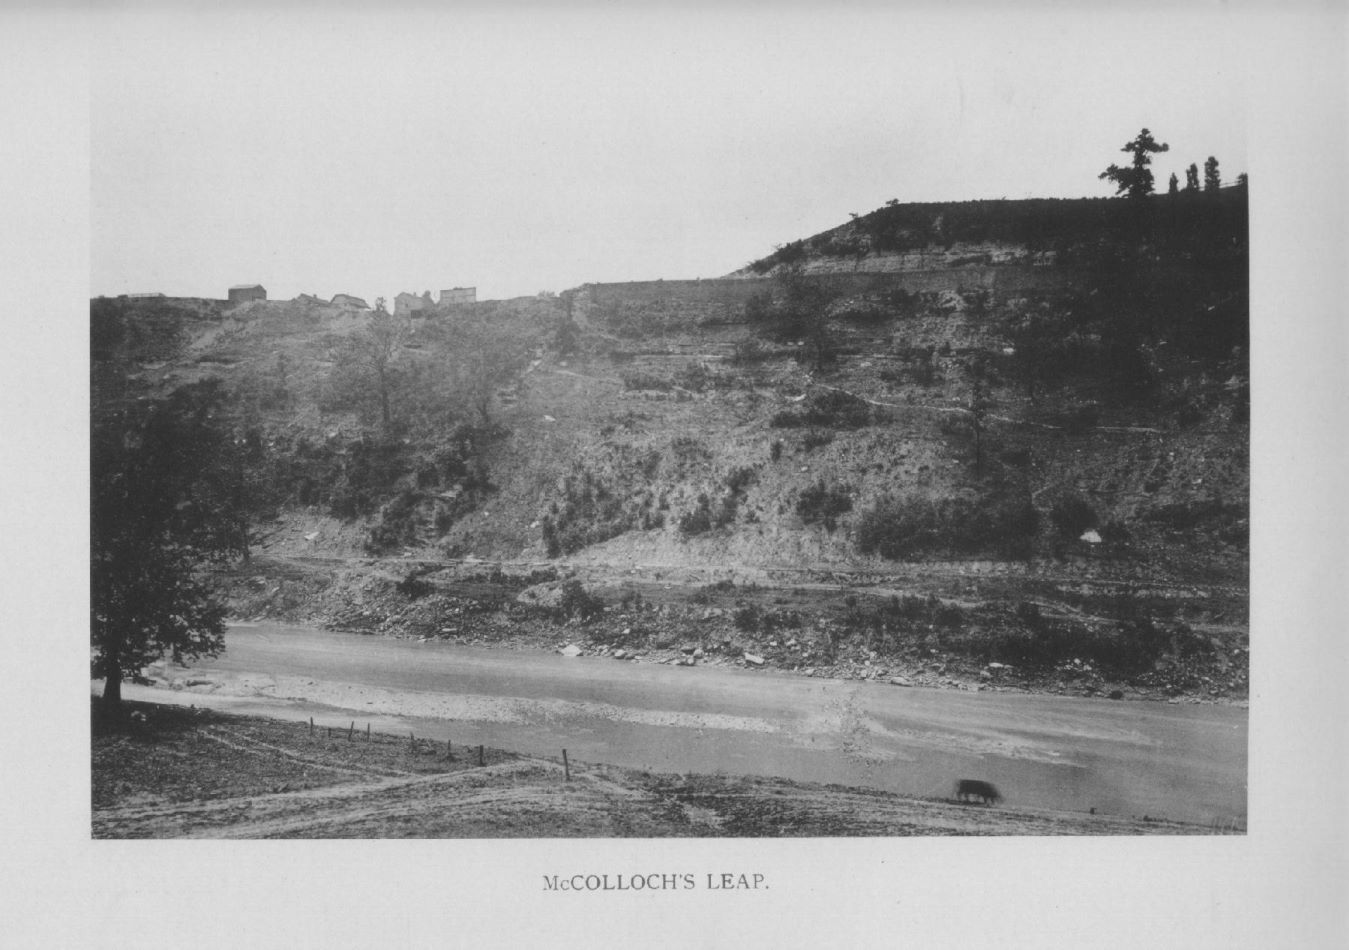 McCulloch's Leap, Wheeling, West Virginia